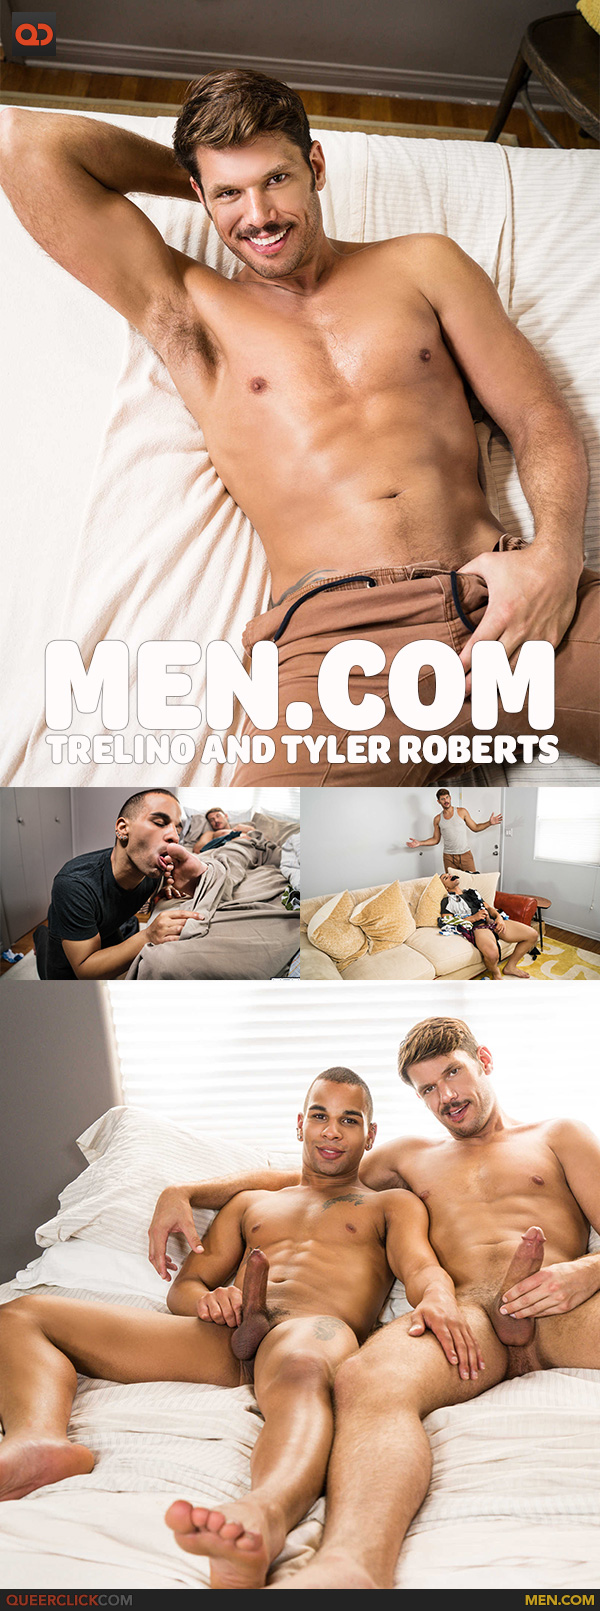 Men.com:  Trelino and Tyler Roberts